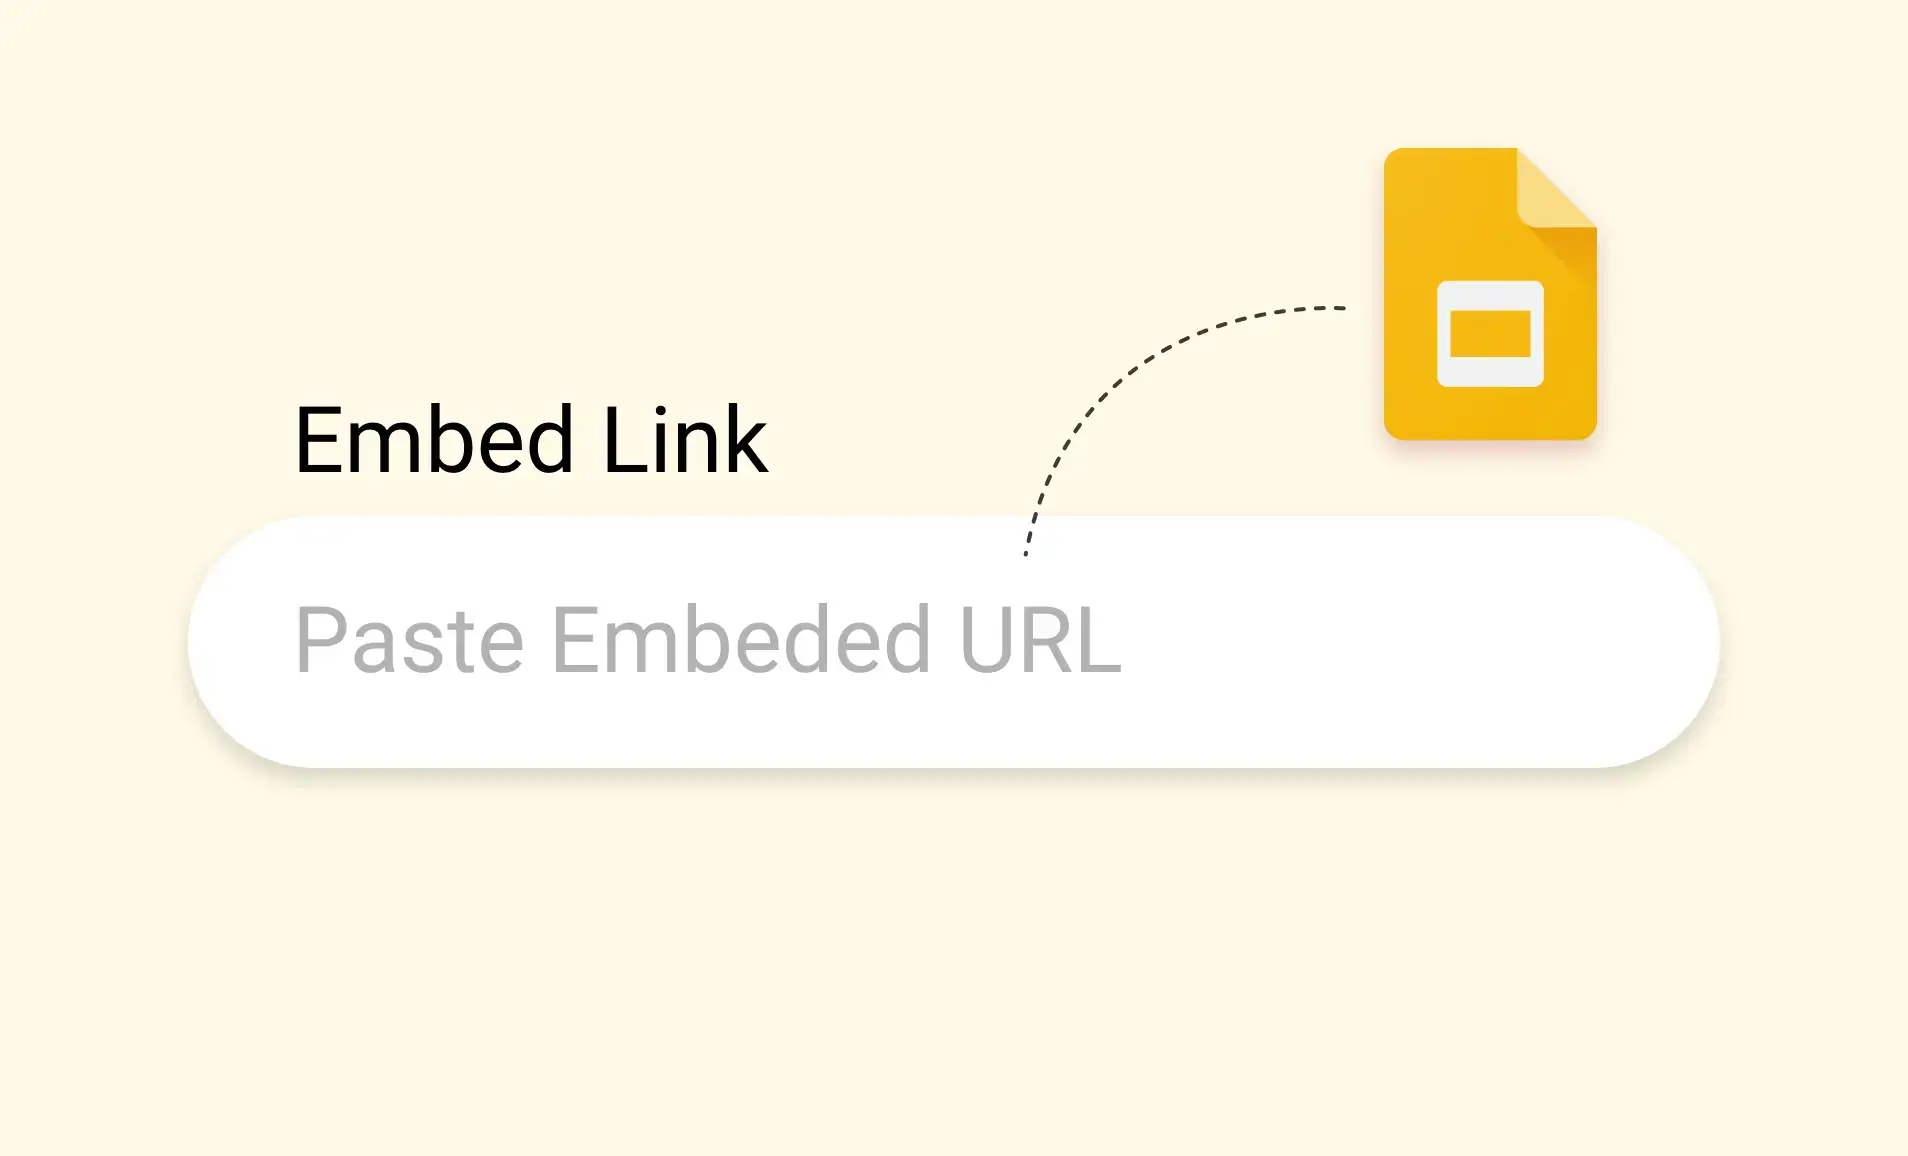 Digital signage Google Slides app interface with the option to paste embed url from google slides.